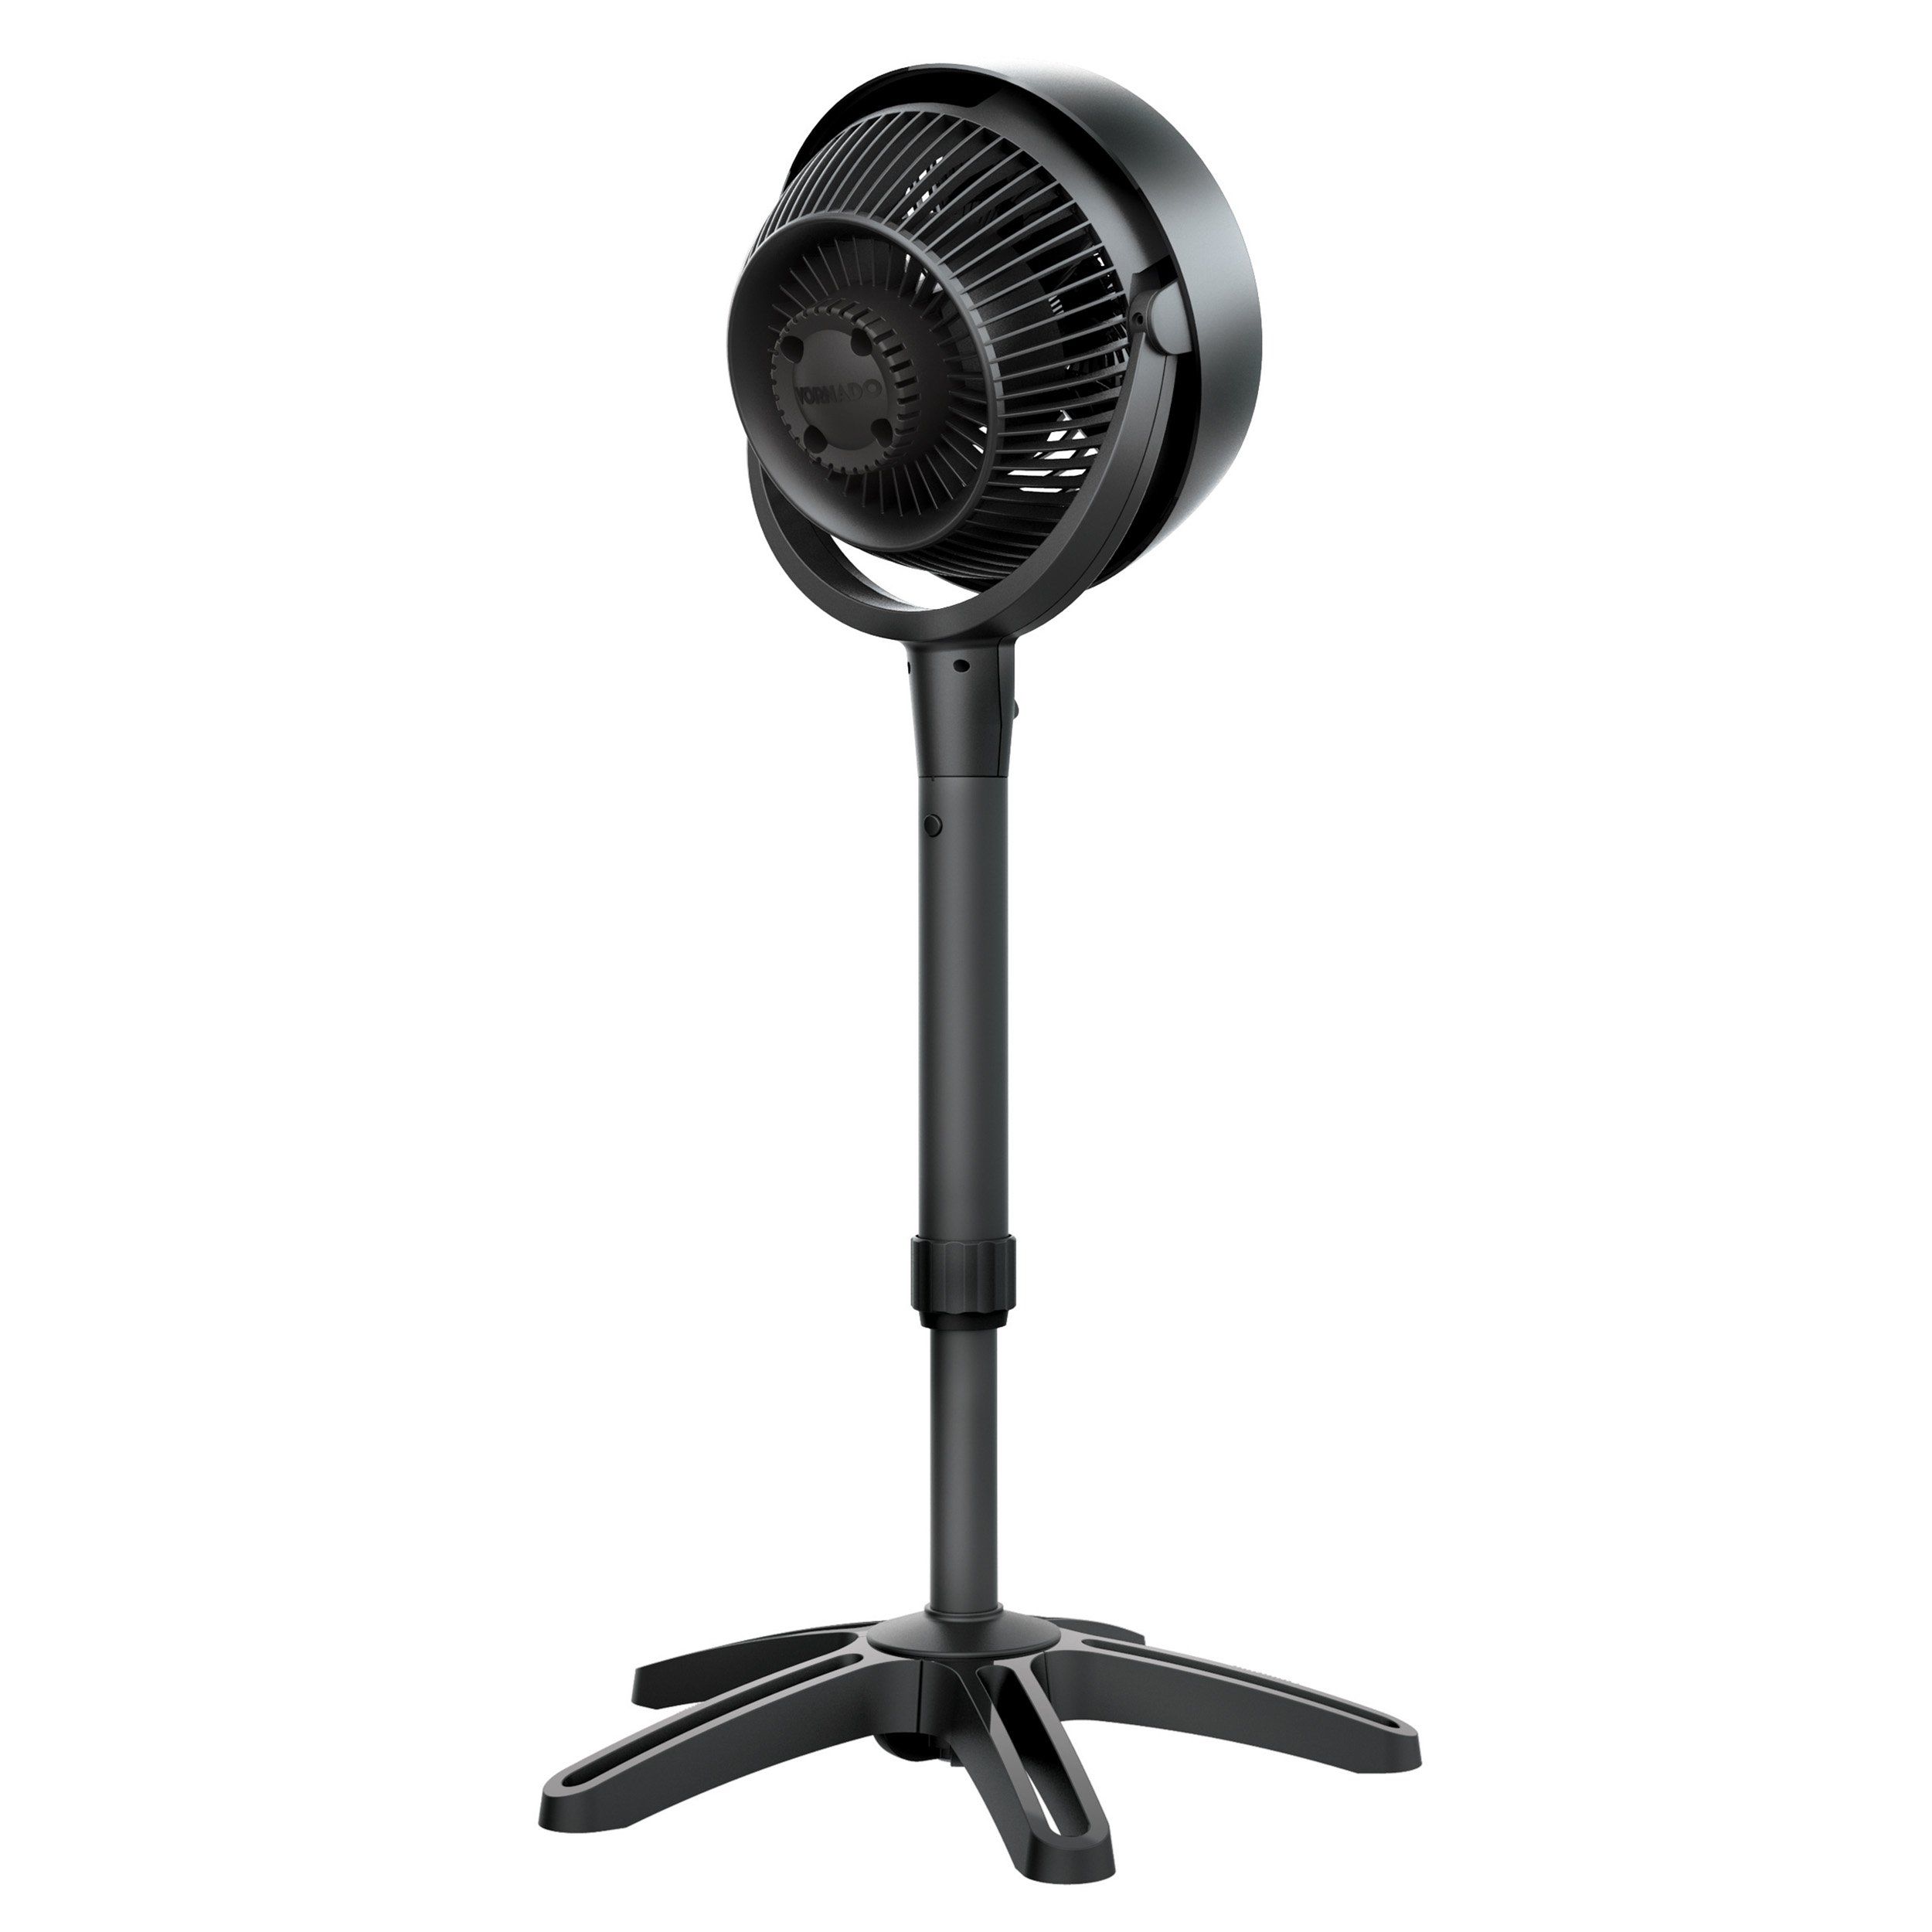 Vornado 683 Medium Pedestal Whole Room Air Circulator Fan, 3 Speed Control, Adjustable Standing Height, 32 to 38 Inches, Black